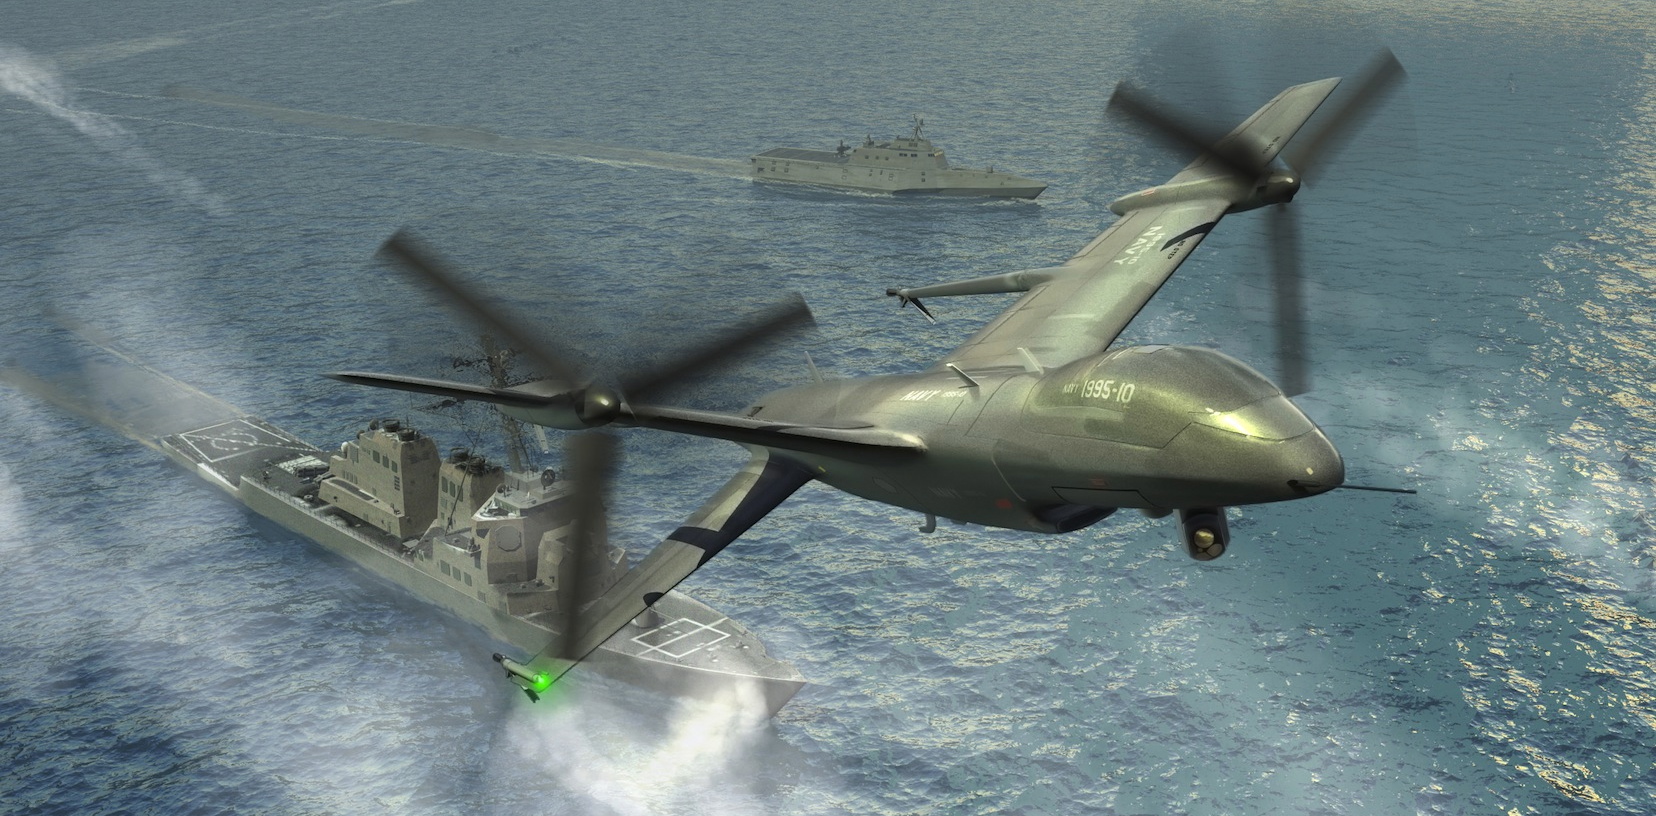 TERN UAV DARPA naval